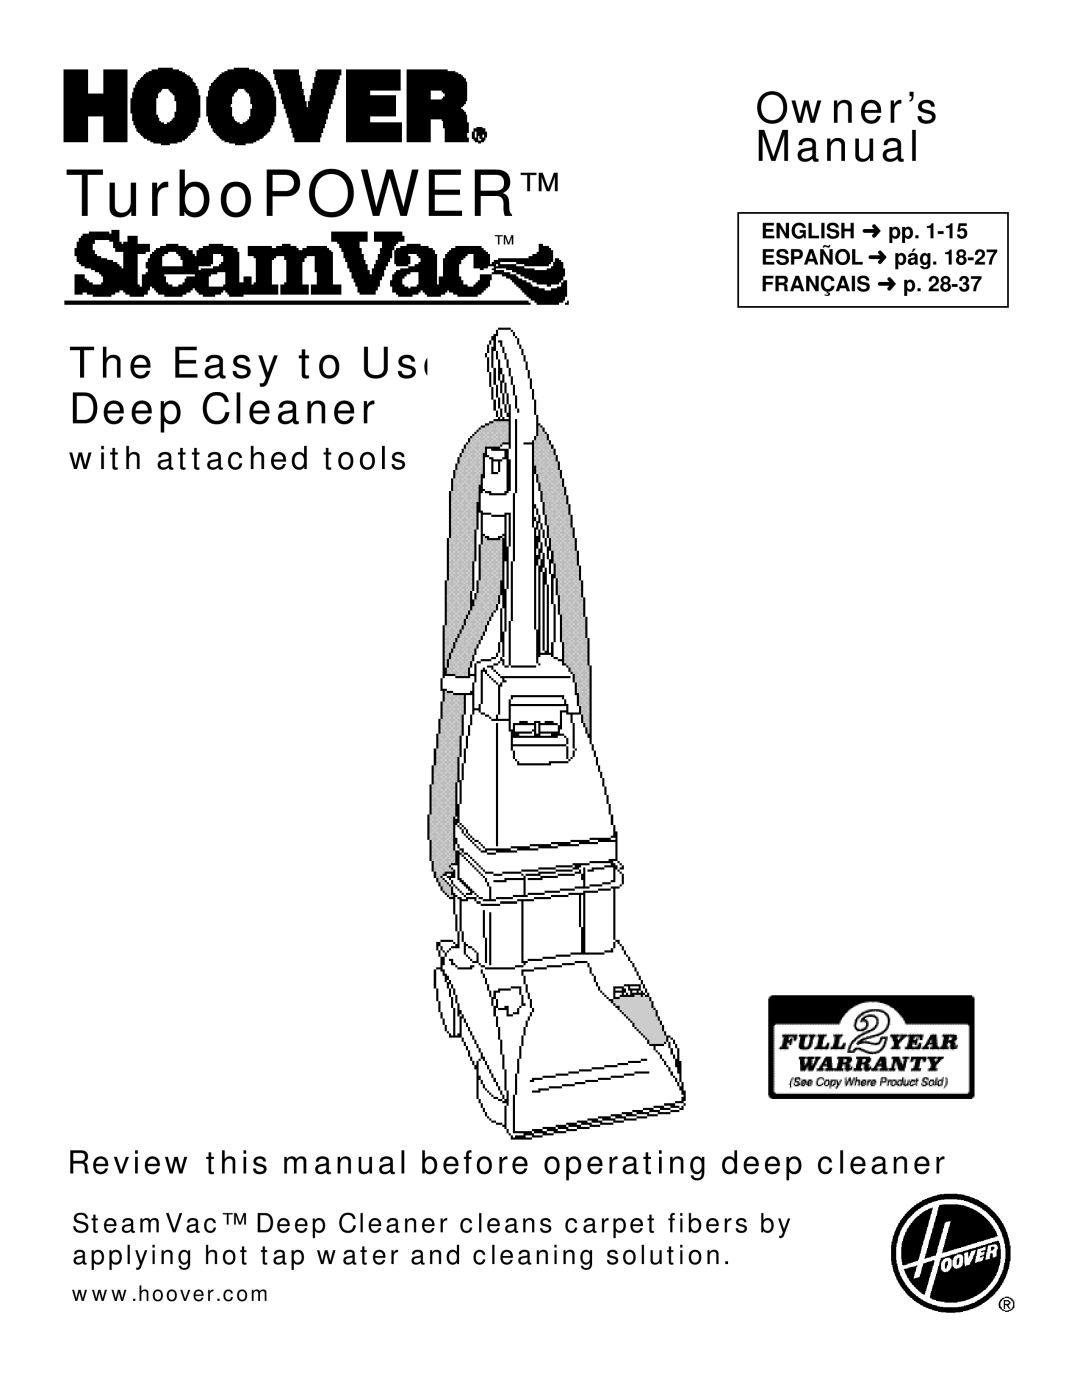 Hoover SteamVacuum owner manual TurboPOWER, English pp Español pág Français p 